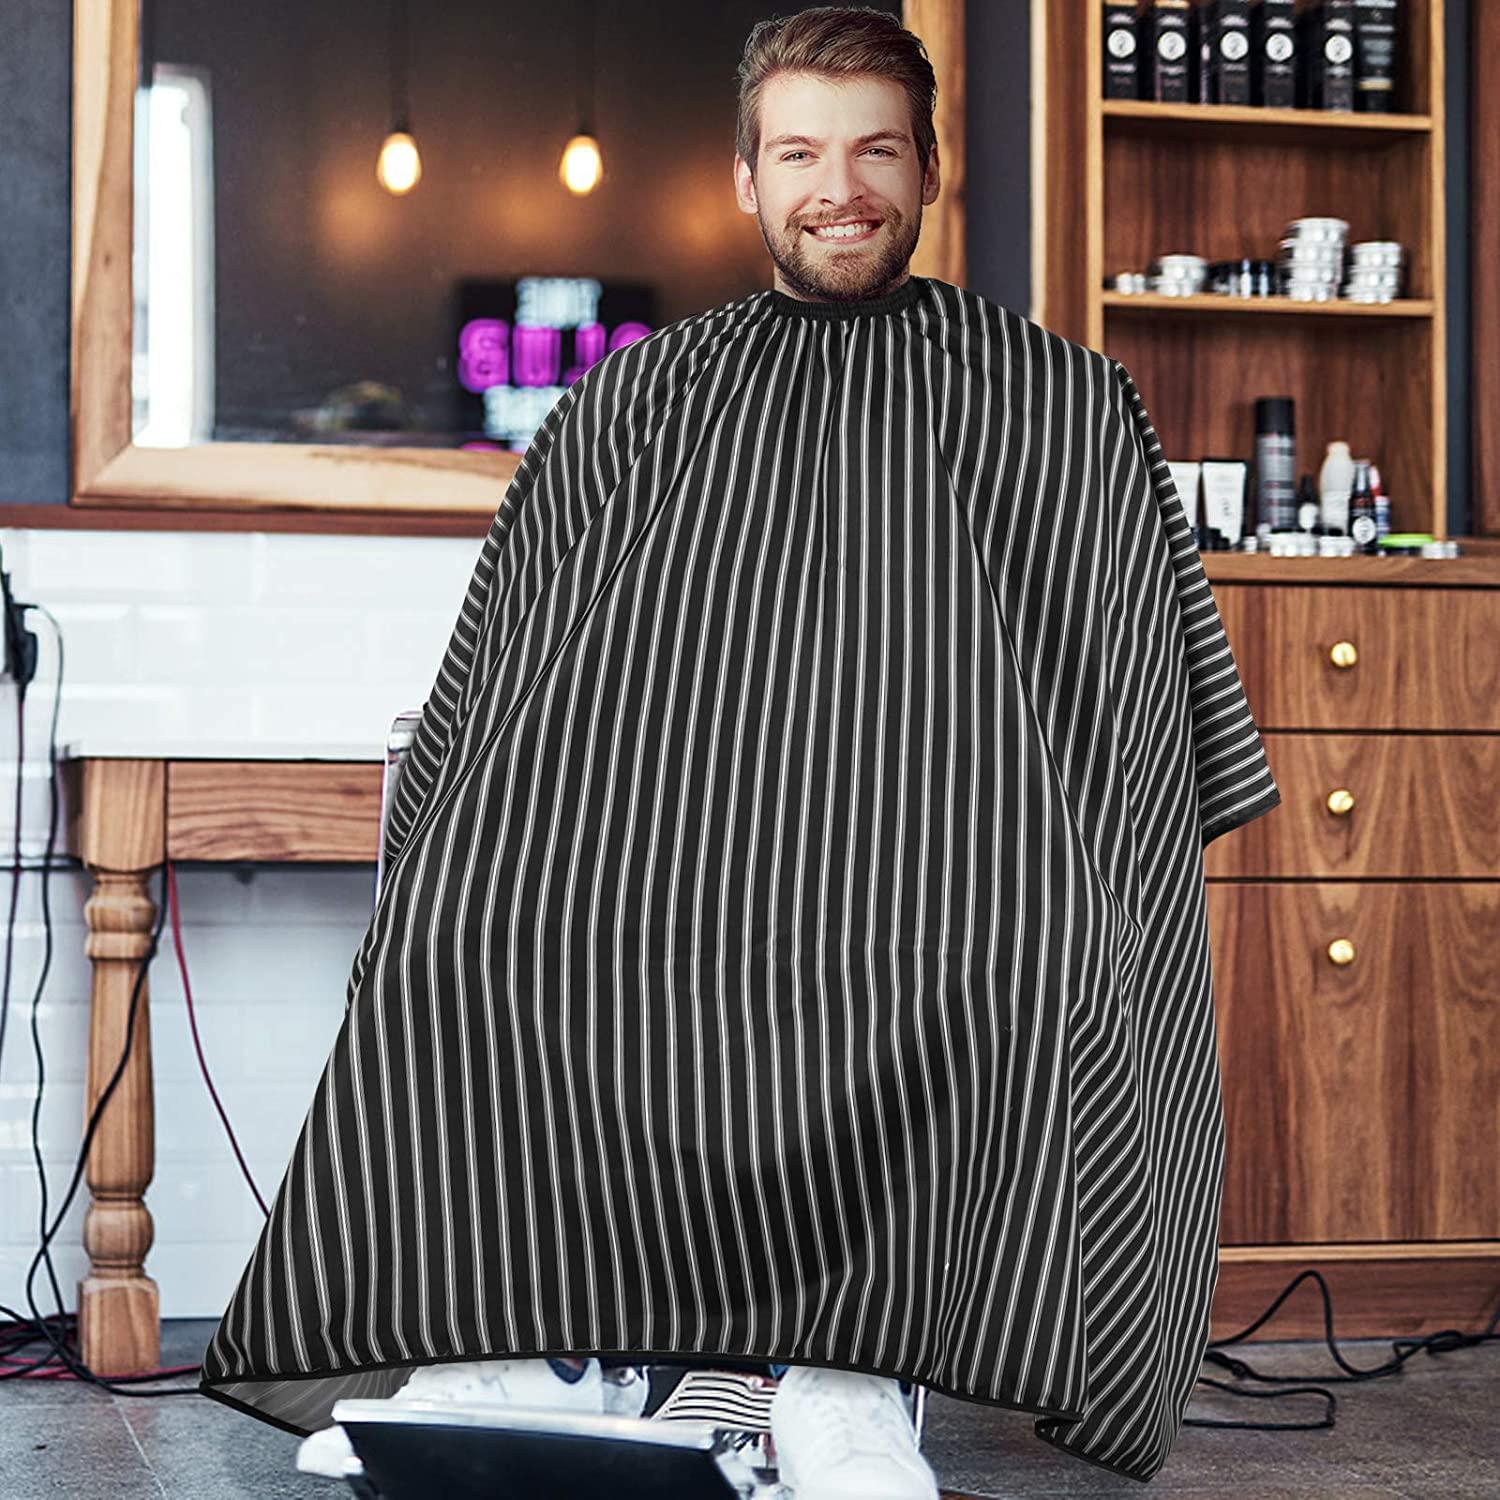  Hair Cutting, Cape Barber Cape, Elastic Neck Band